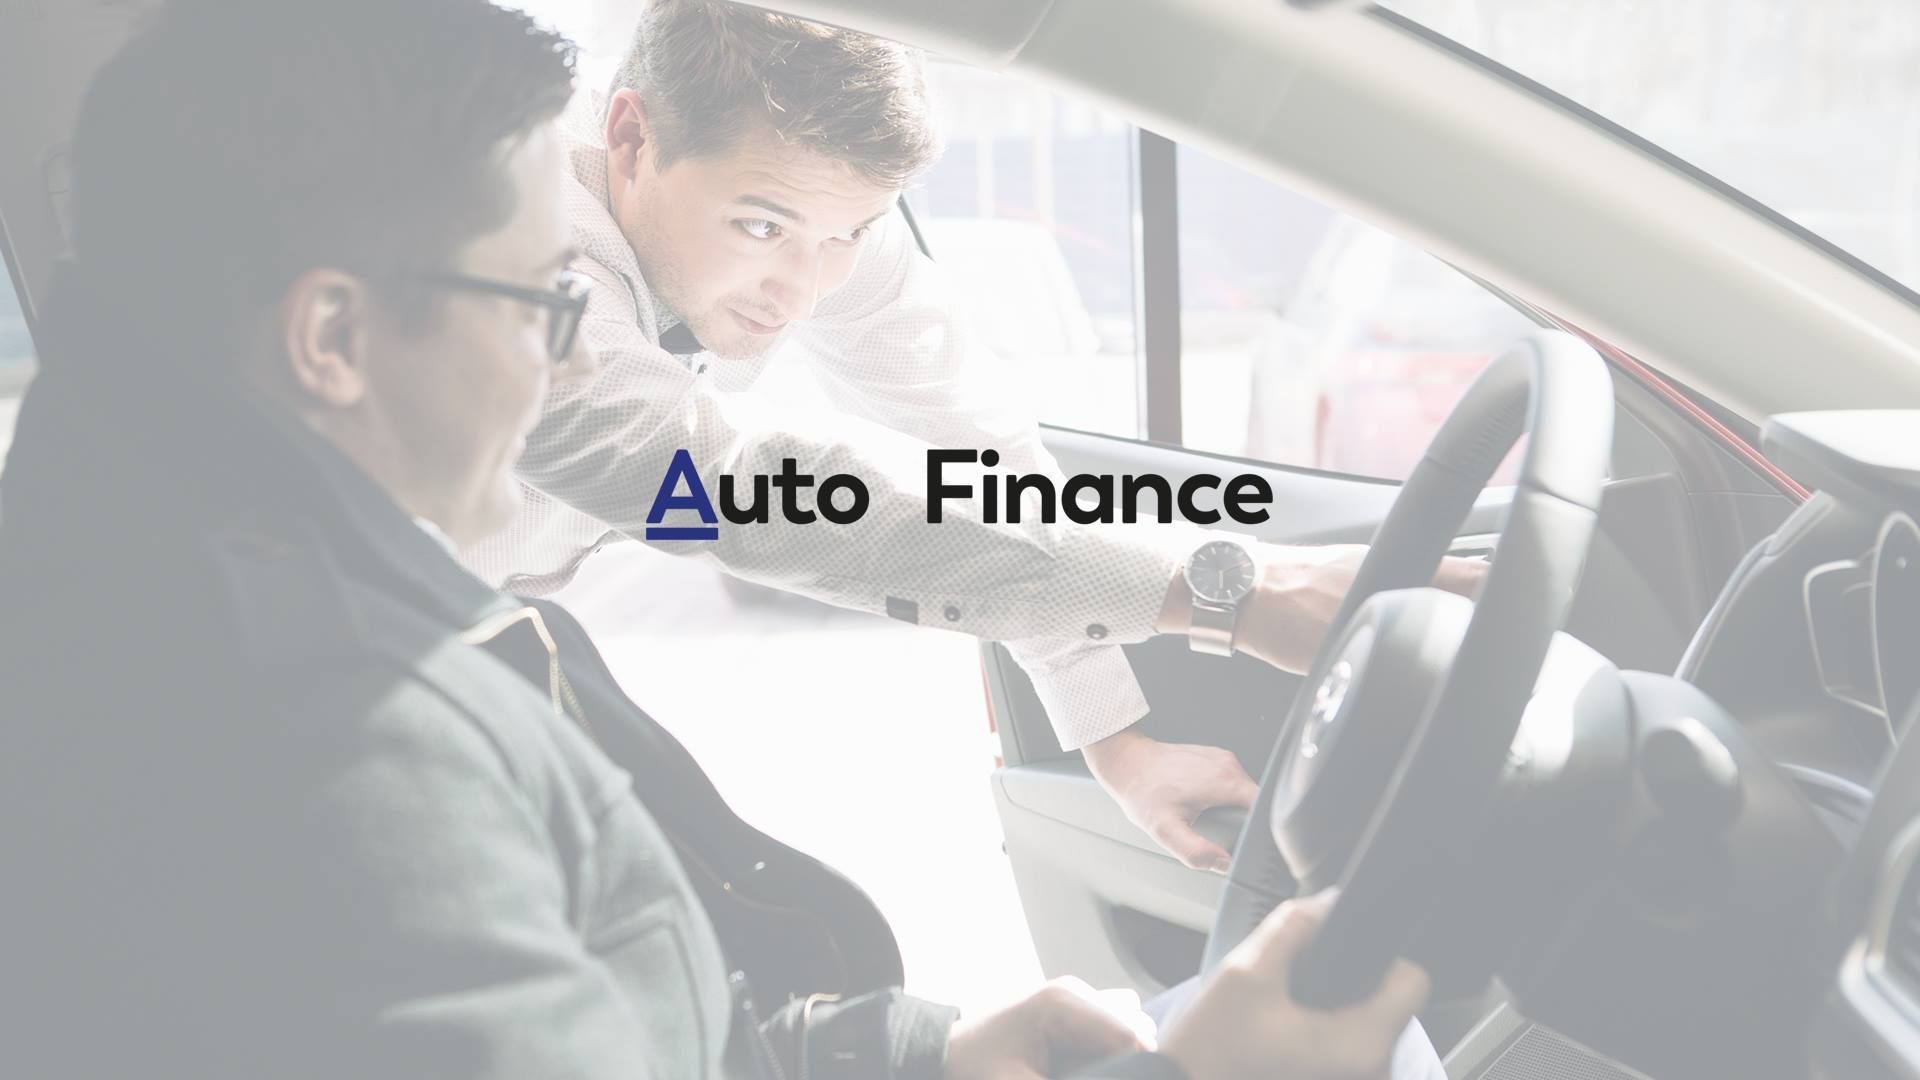 Dostawcze Auto Finance top banner